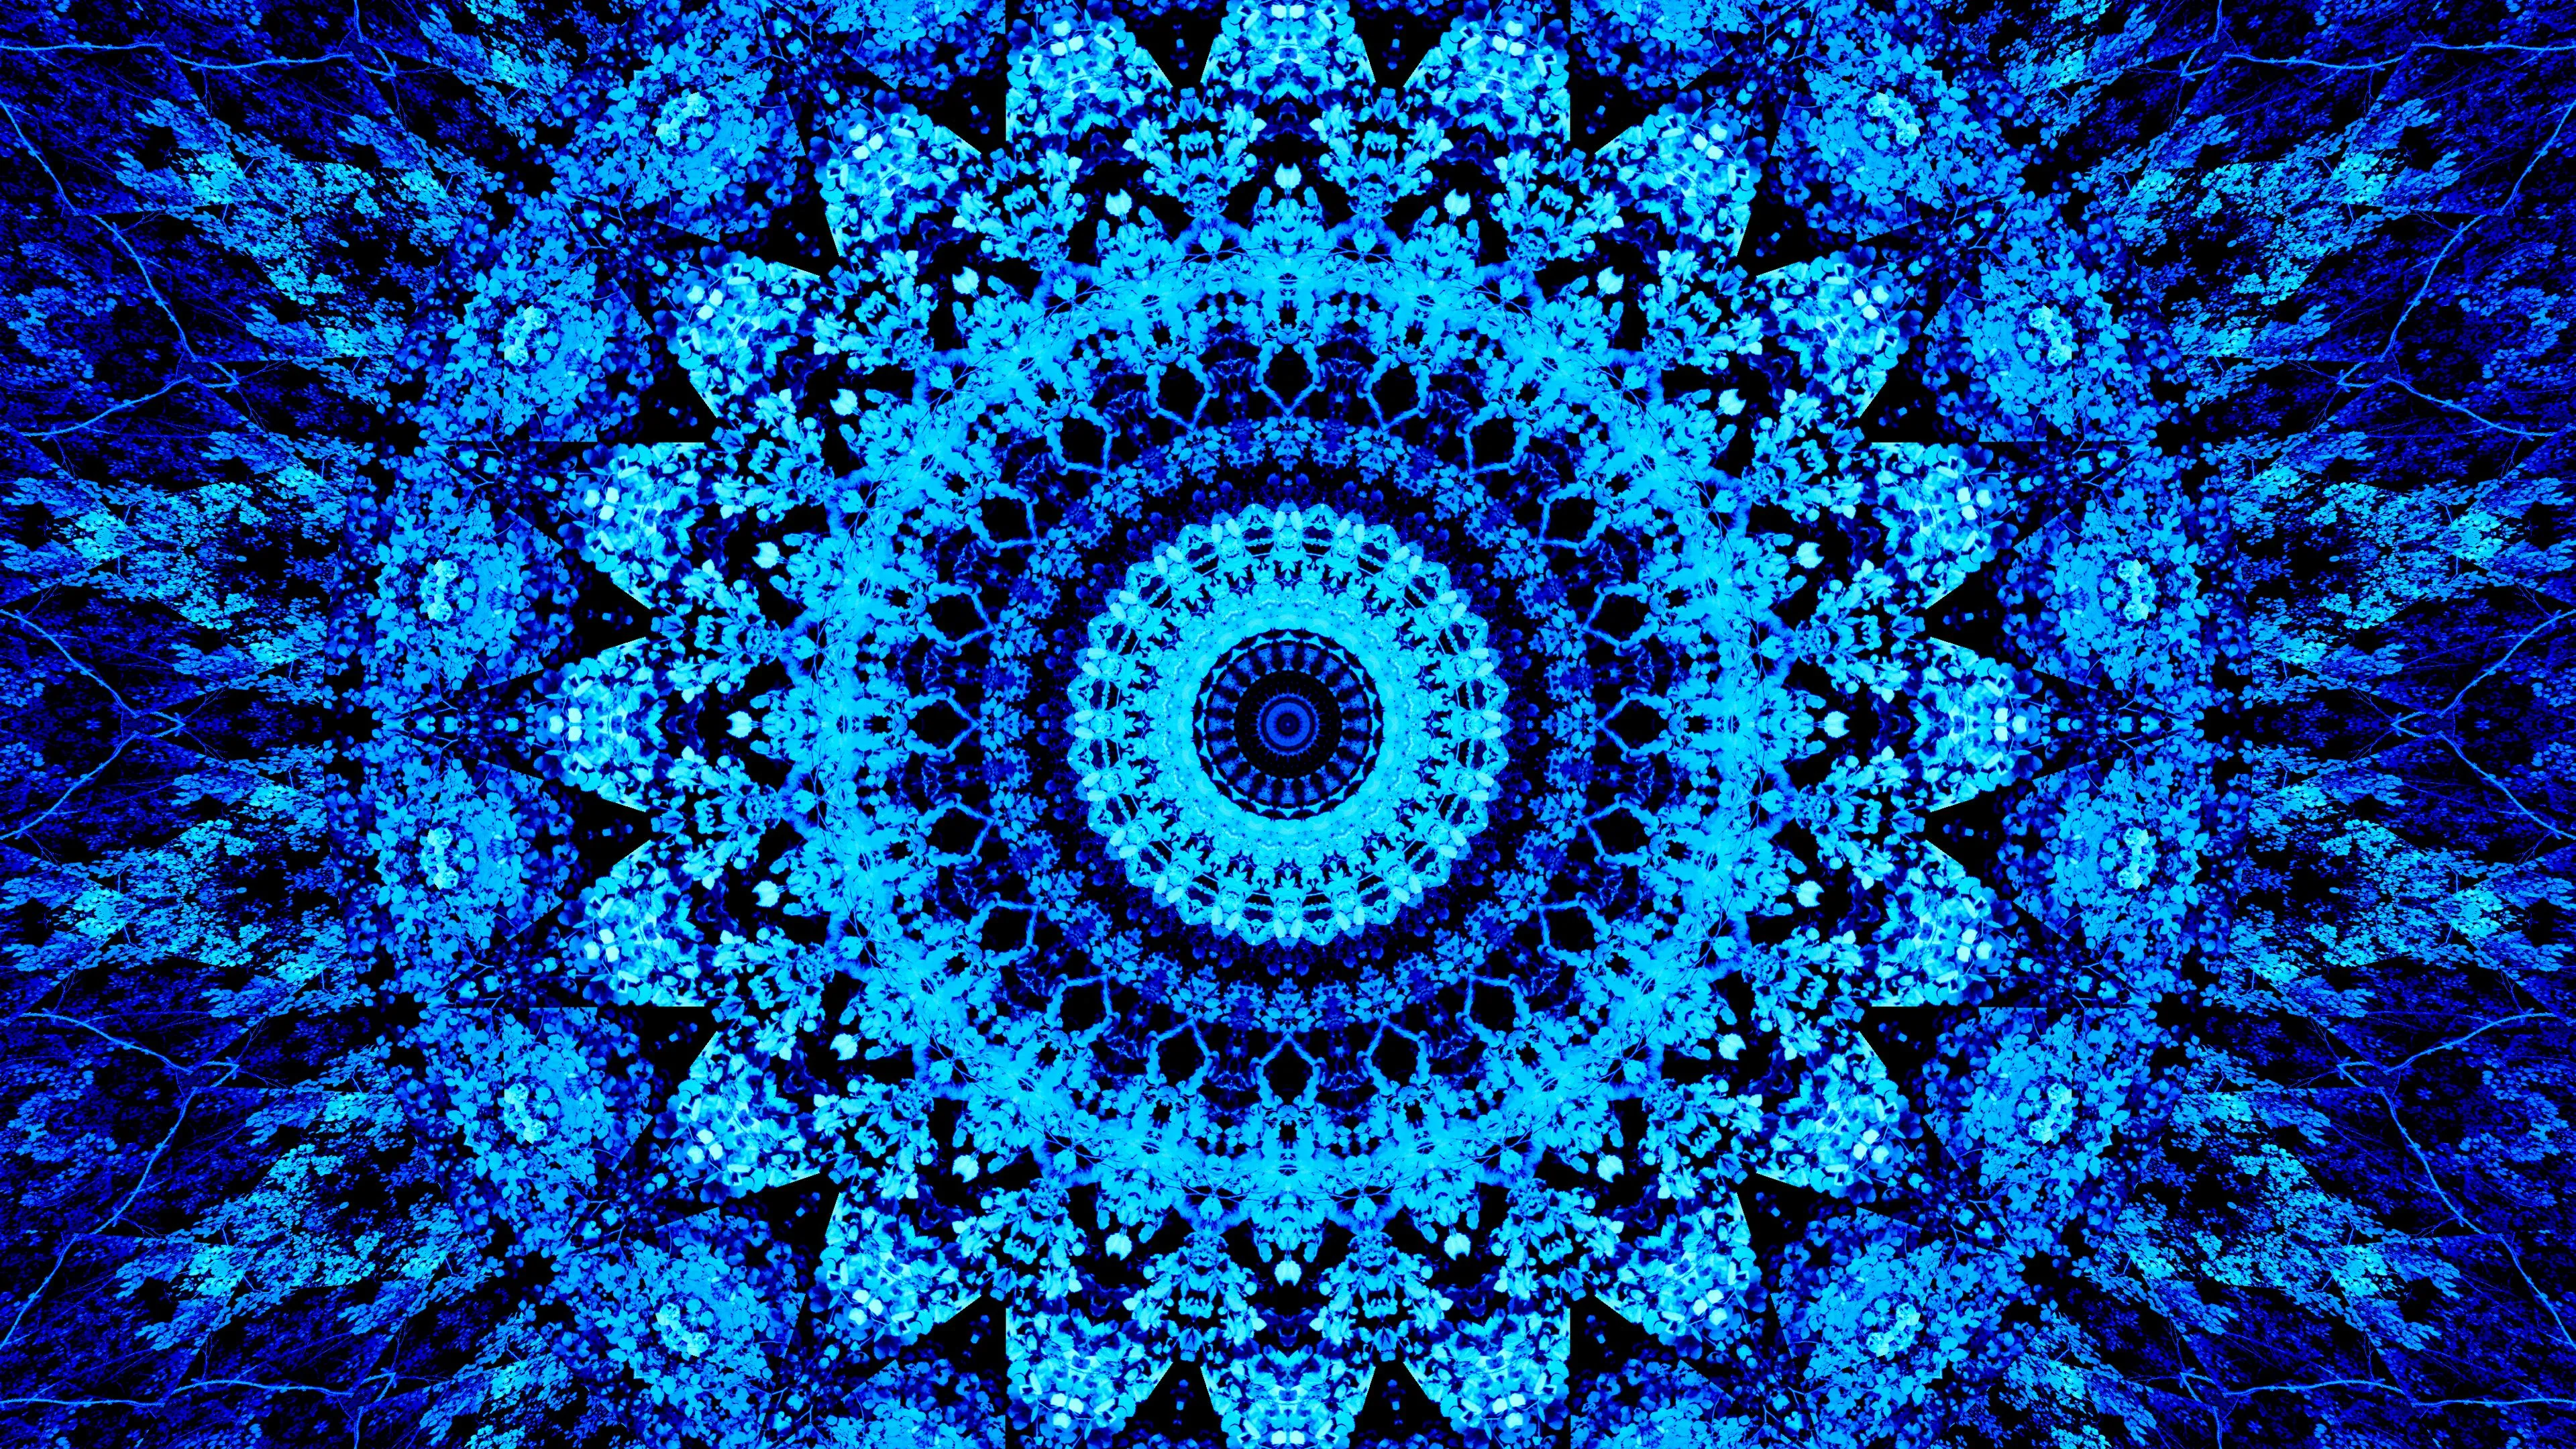 mandala pattern circles blue bright 4k 1691767499